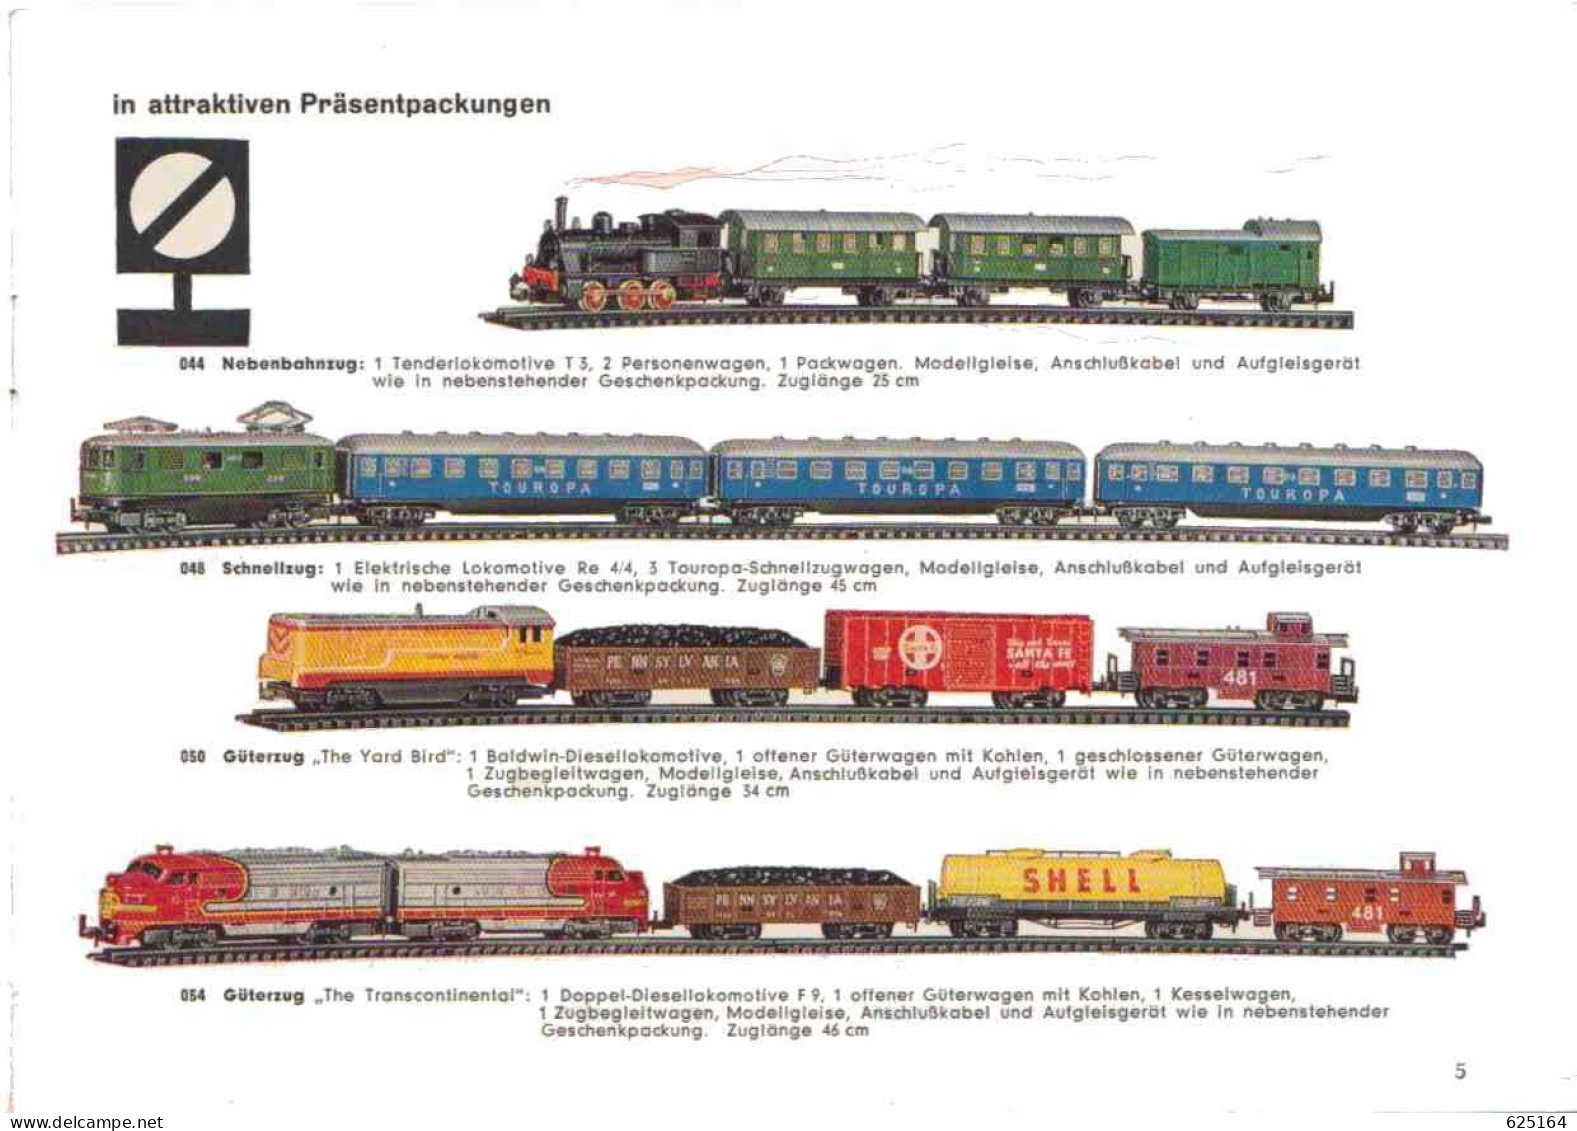 Catalogue ARNOLD RAPIDO 1963/64 Modellbahnkaalog Spur N 9mm Maßstab 1:160 - Deutsch